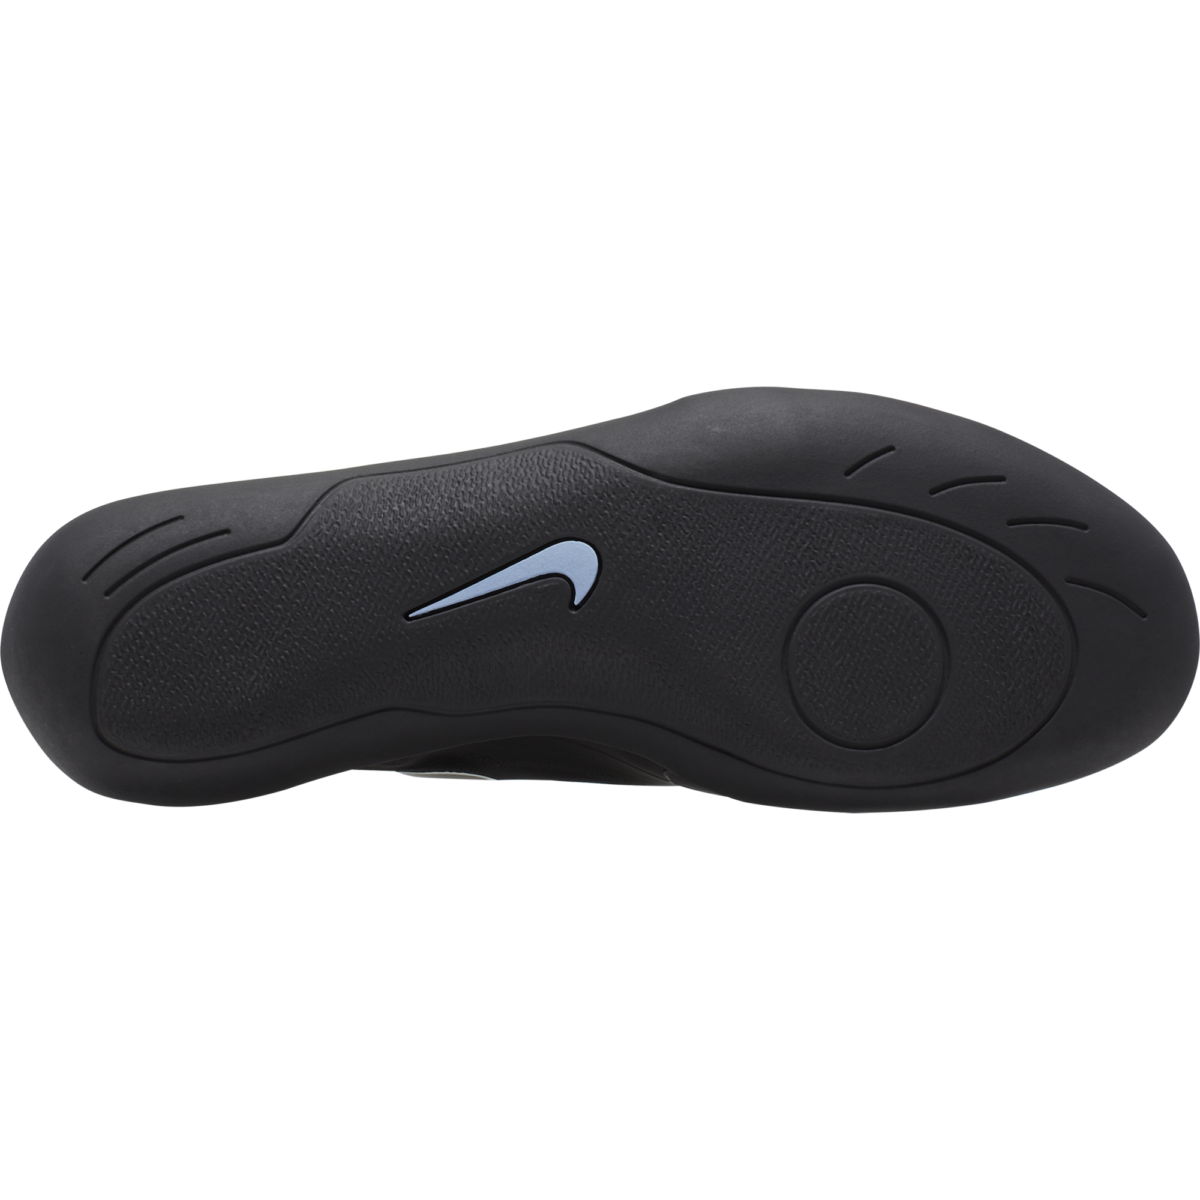 Unisex Nike Zoom SD 4 Throwing Shoe 685135-003